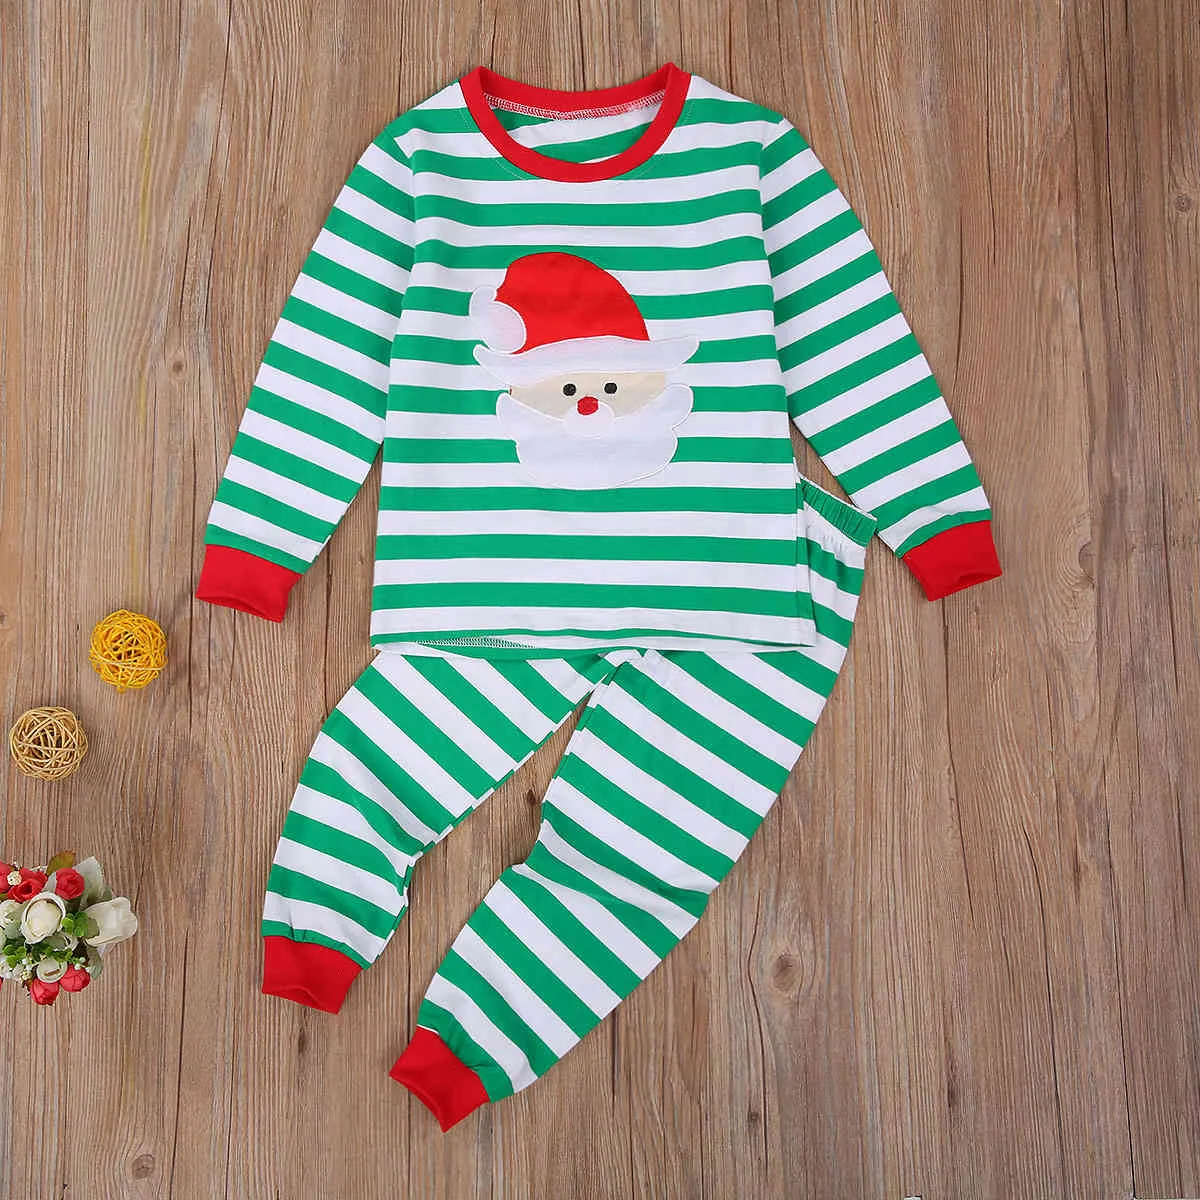 6M-5Yクリスマス幼児子供赤ちゃん男の子ガールパジャマを設定赤緑の縞模様の漫画サンタ衣装クリスマス衣装210515